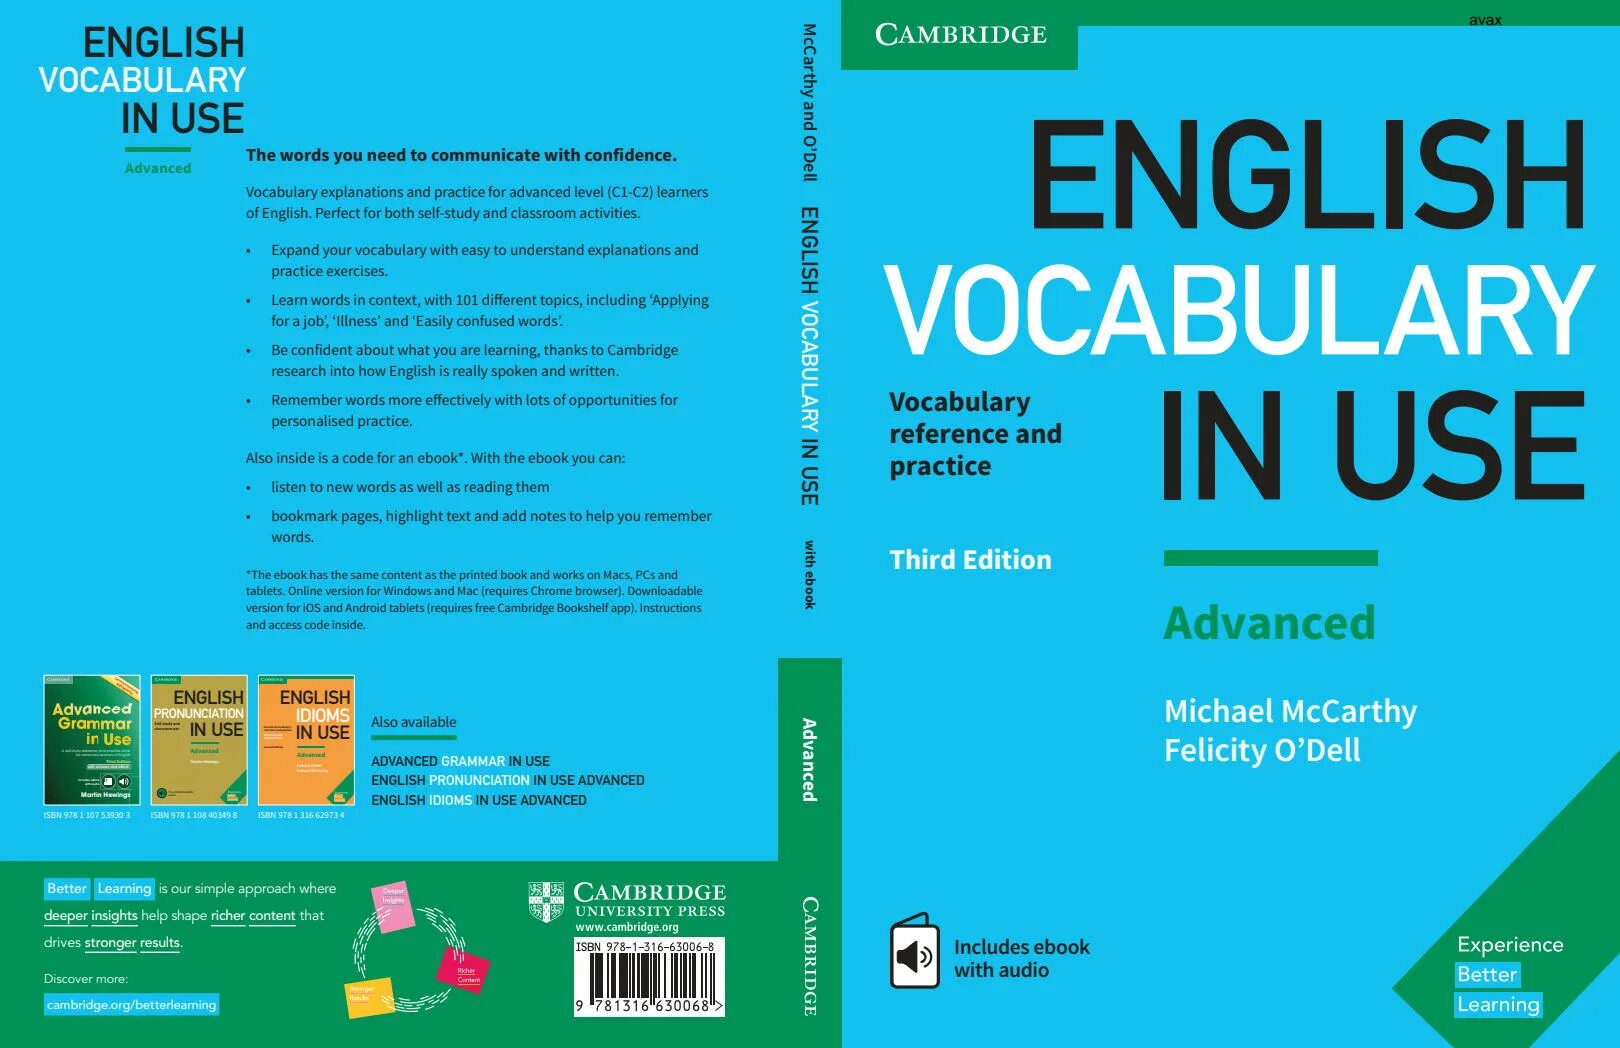 English Vocabulary in use Intermediate pdf. English Vocabulary in use Upper-Intermediate. Cambridge English Vocabulary in use. English Vocabulary in use Advanced. Test english vocabulary in use